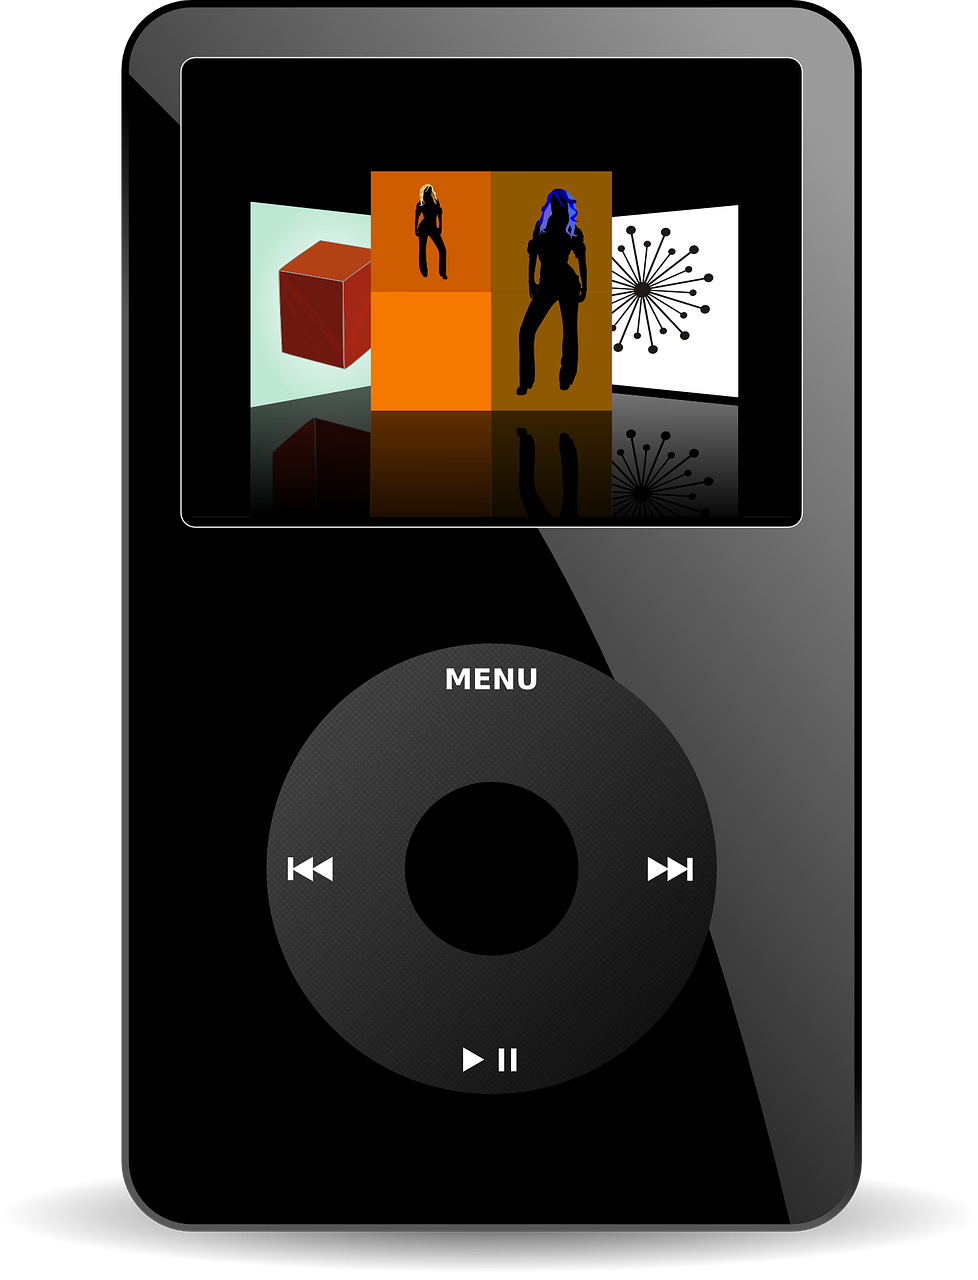 Download Free Photo Of Ipod Apple Music Media Electronics From Needpix Com